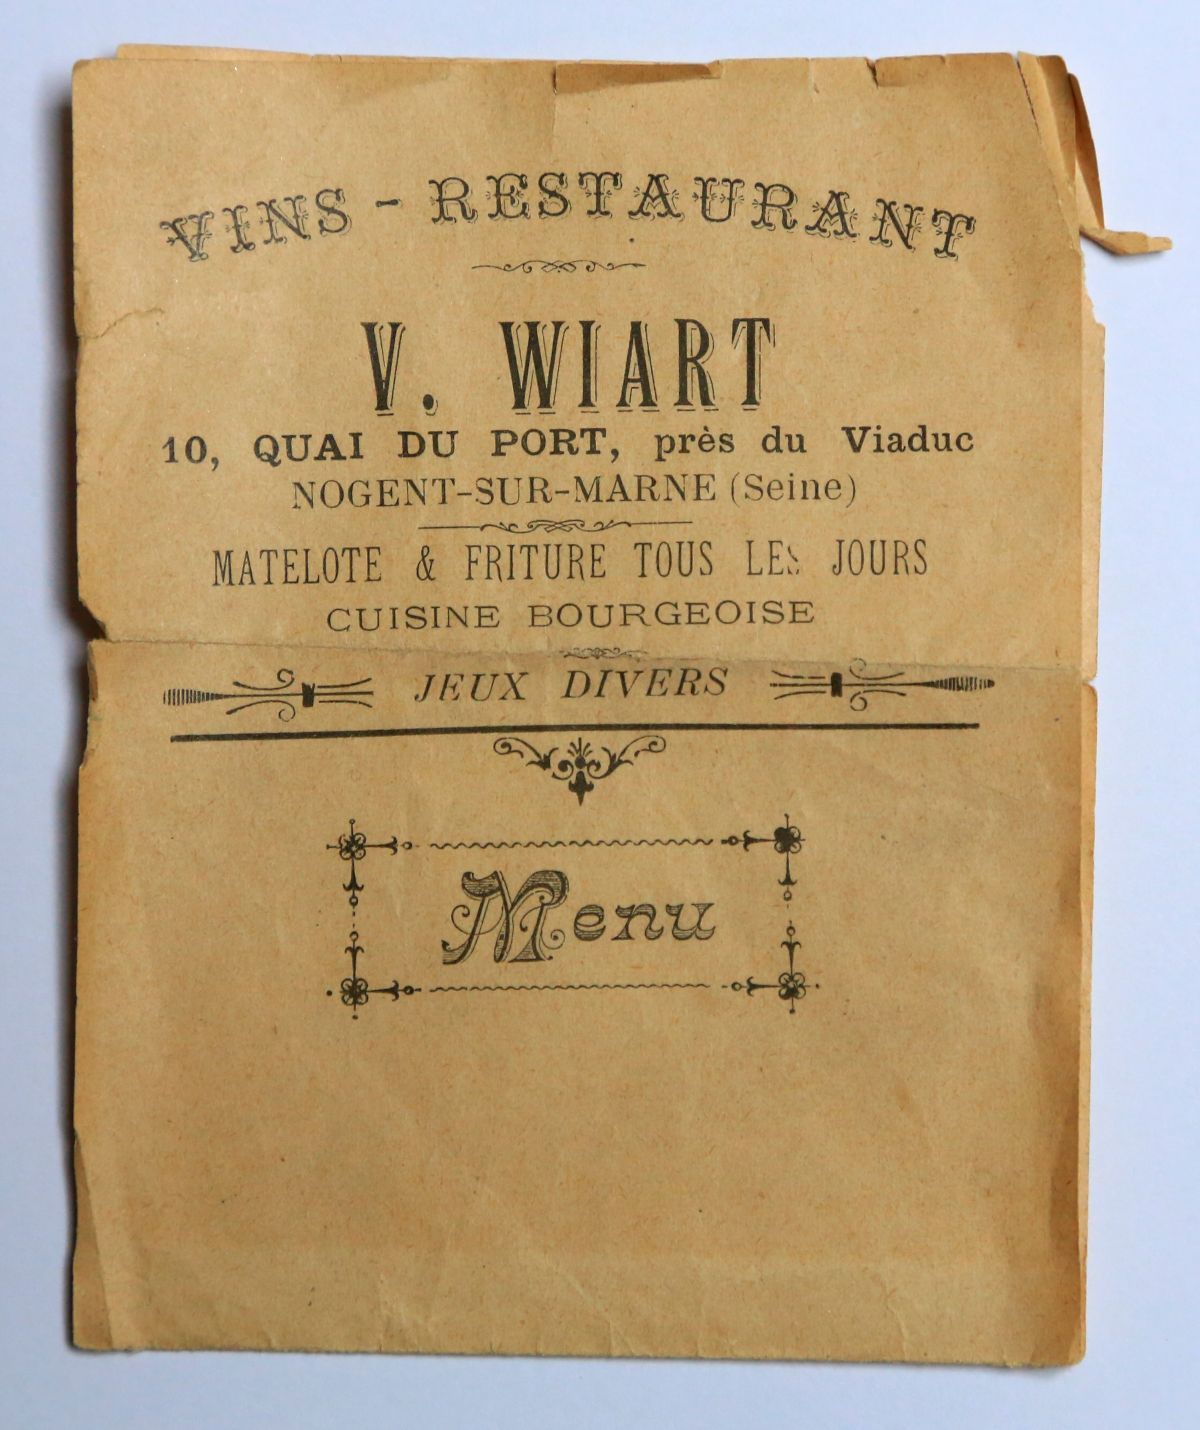 Menu de restaurant Wiart